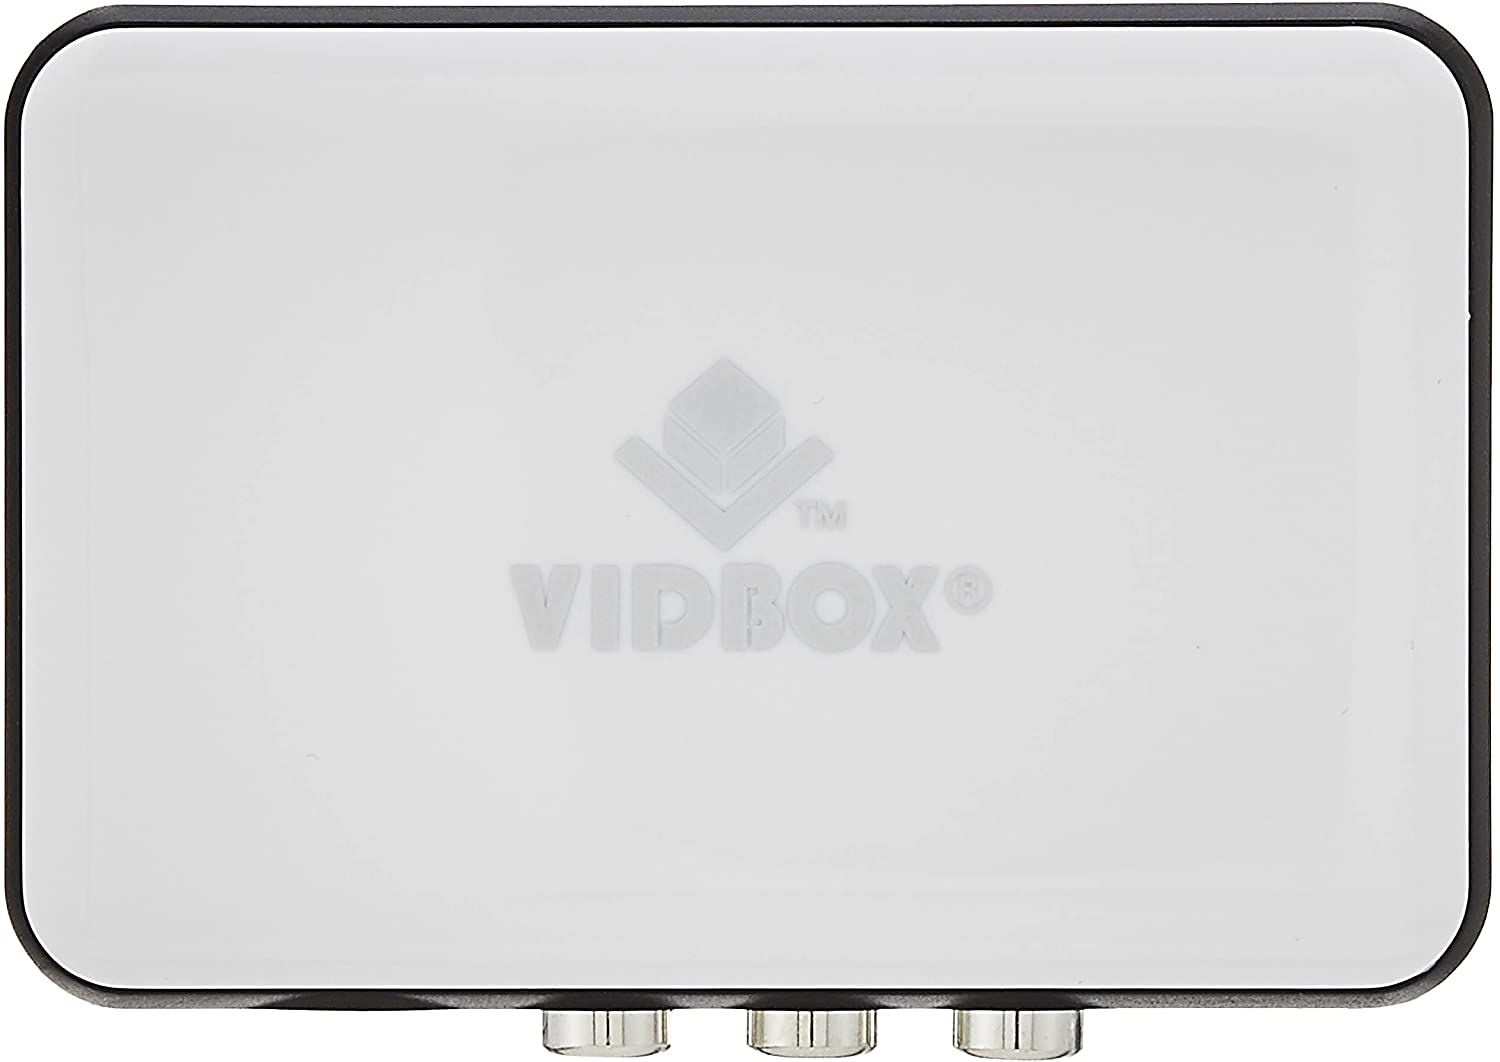 vidbox for mac video